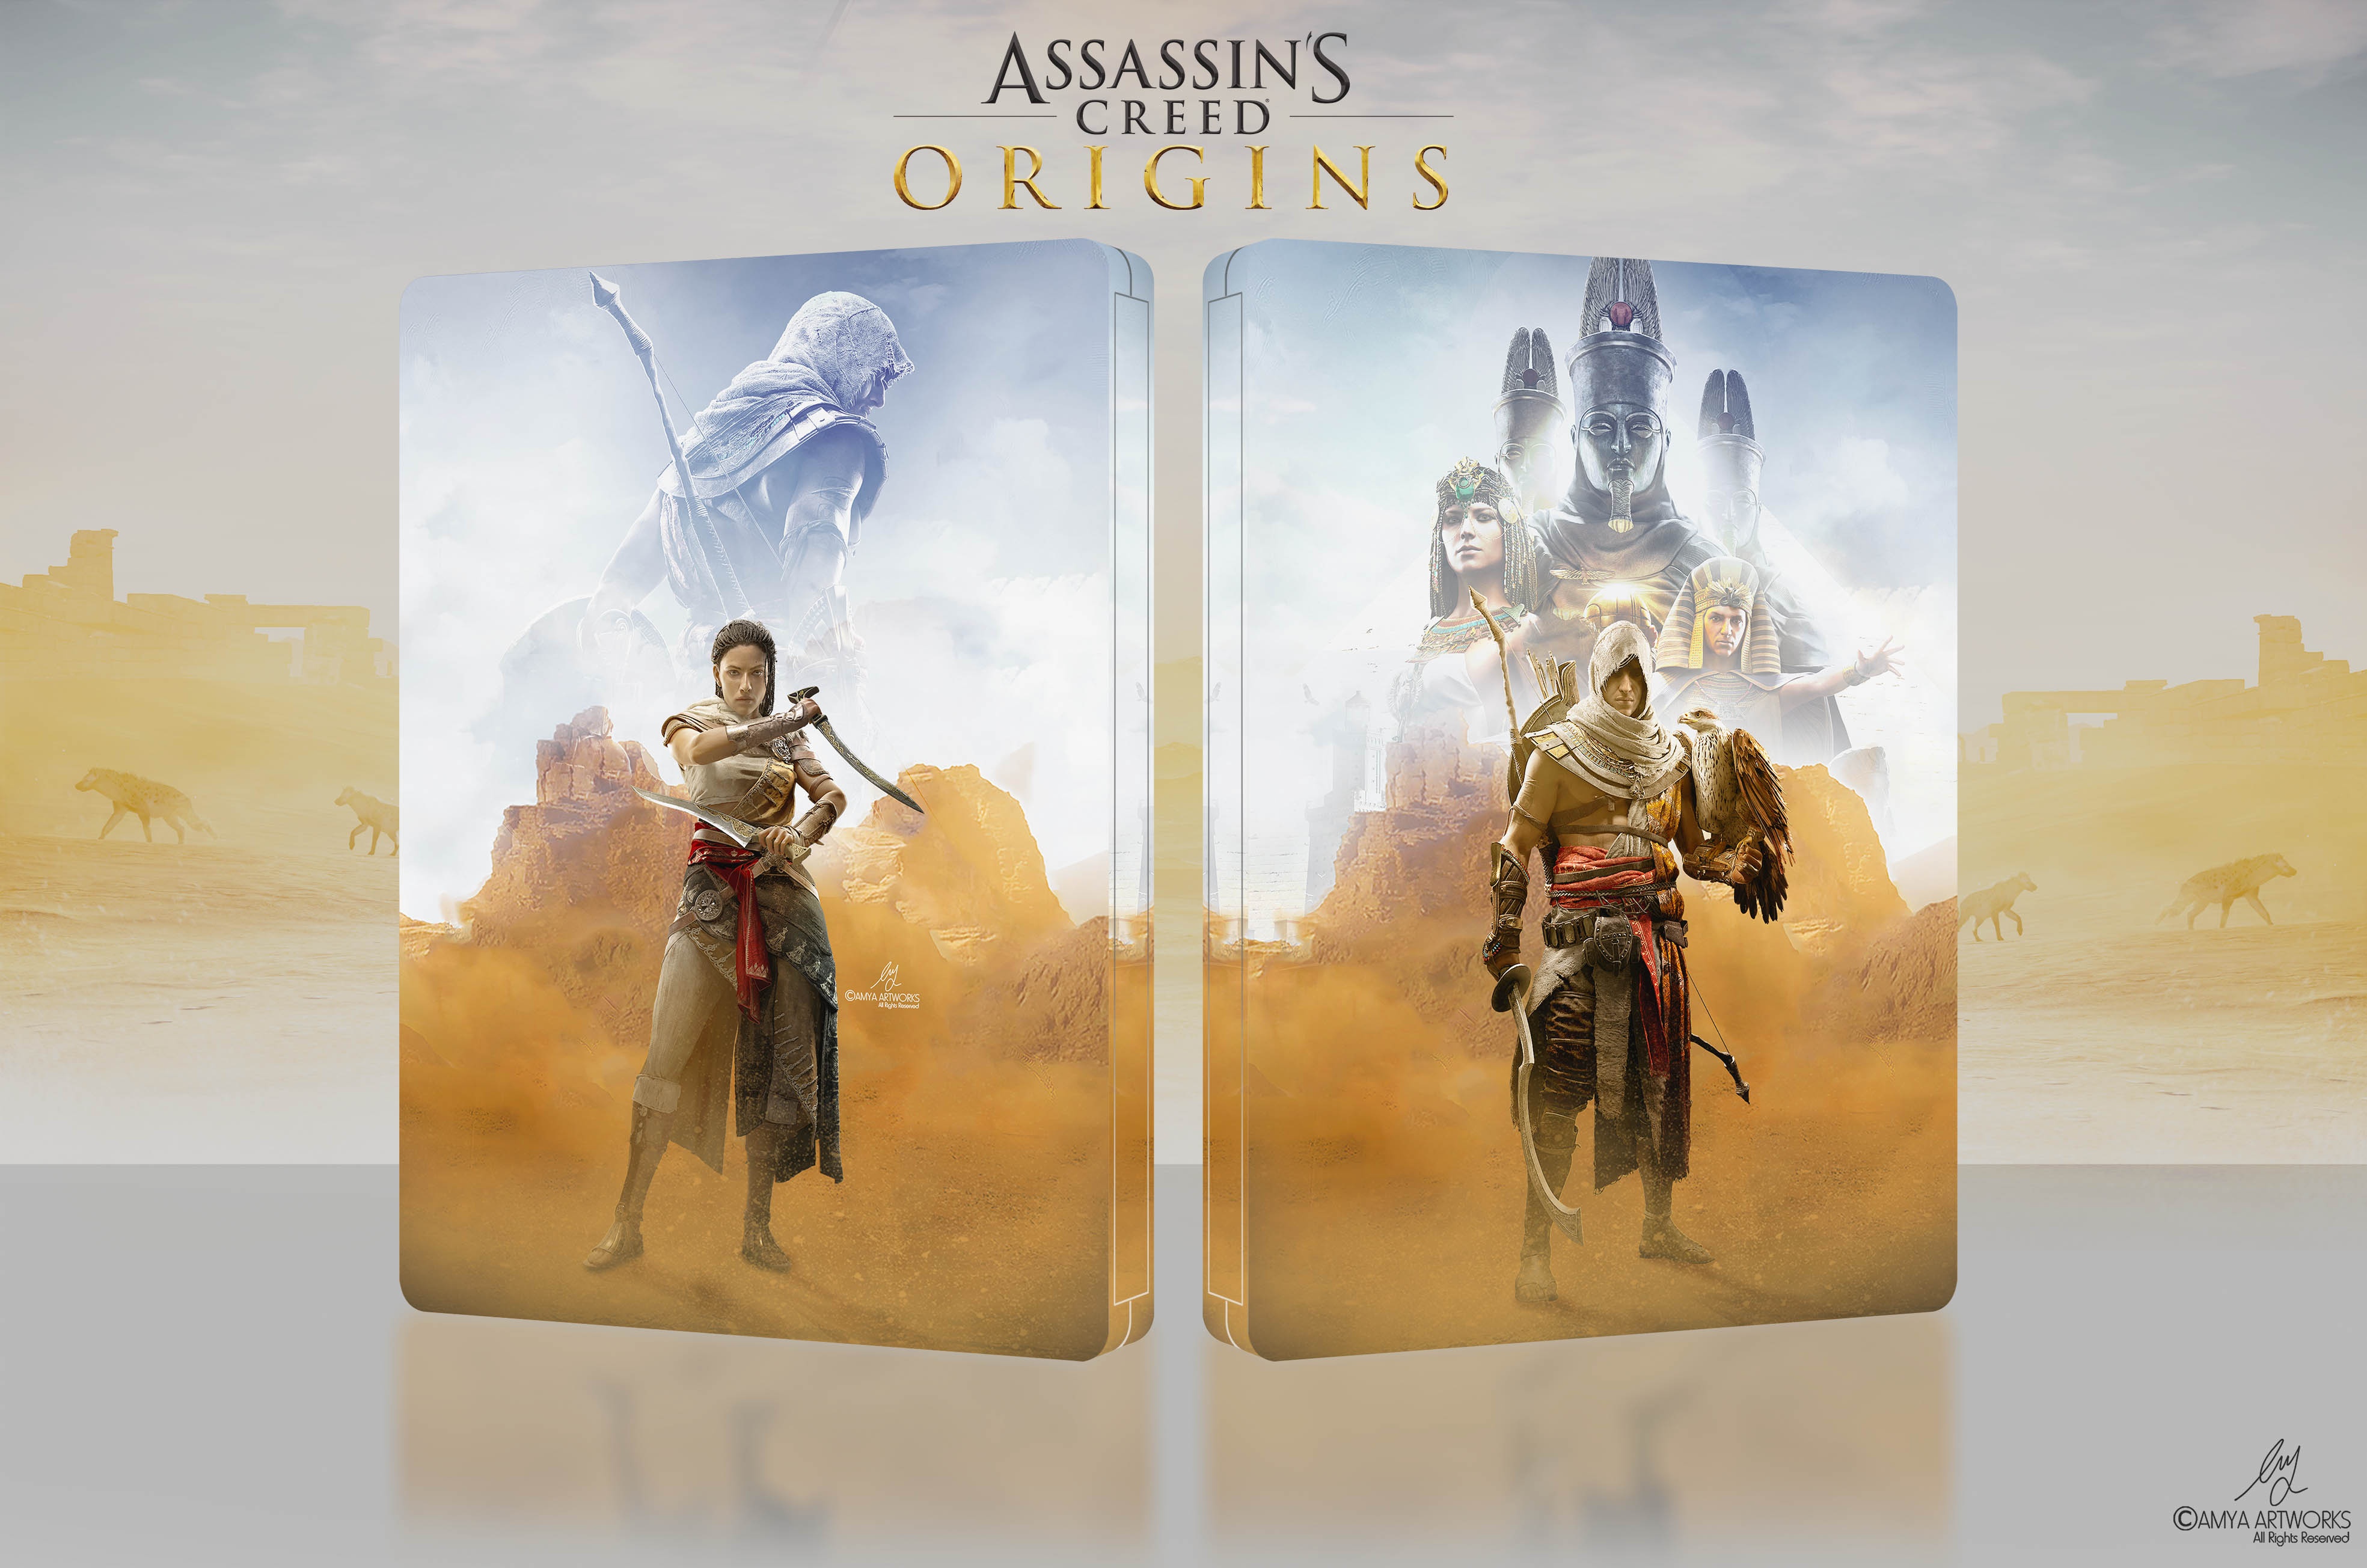 Assassin's Creed Origins box cover